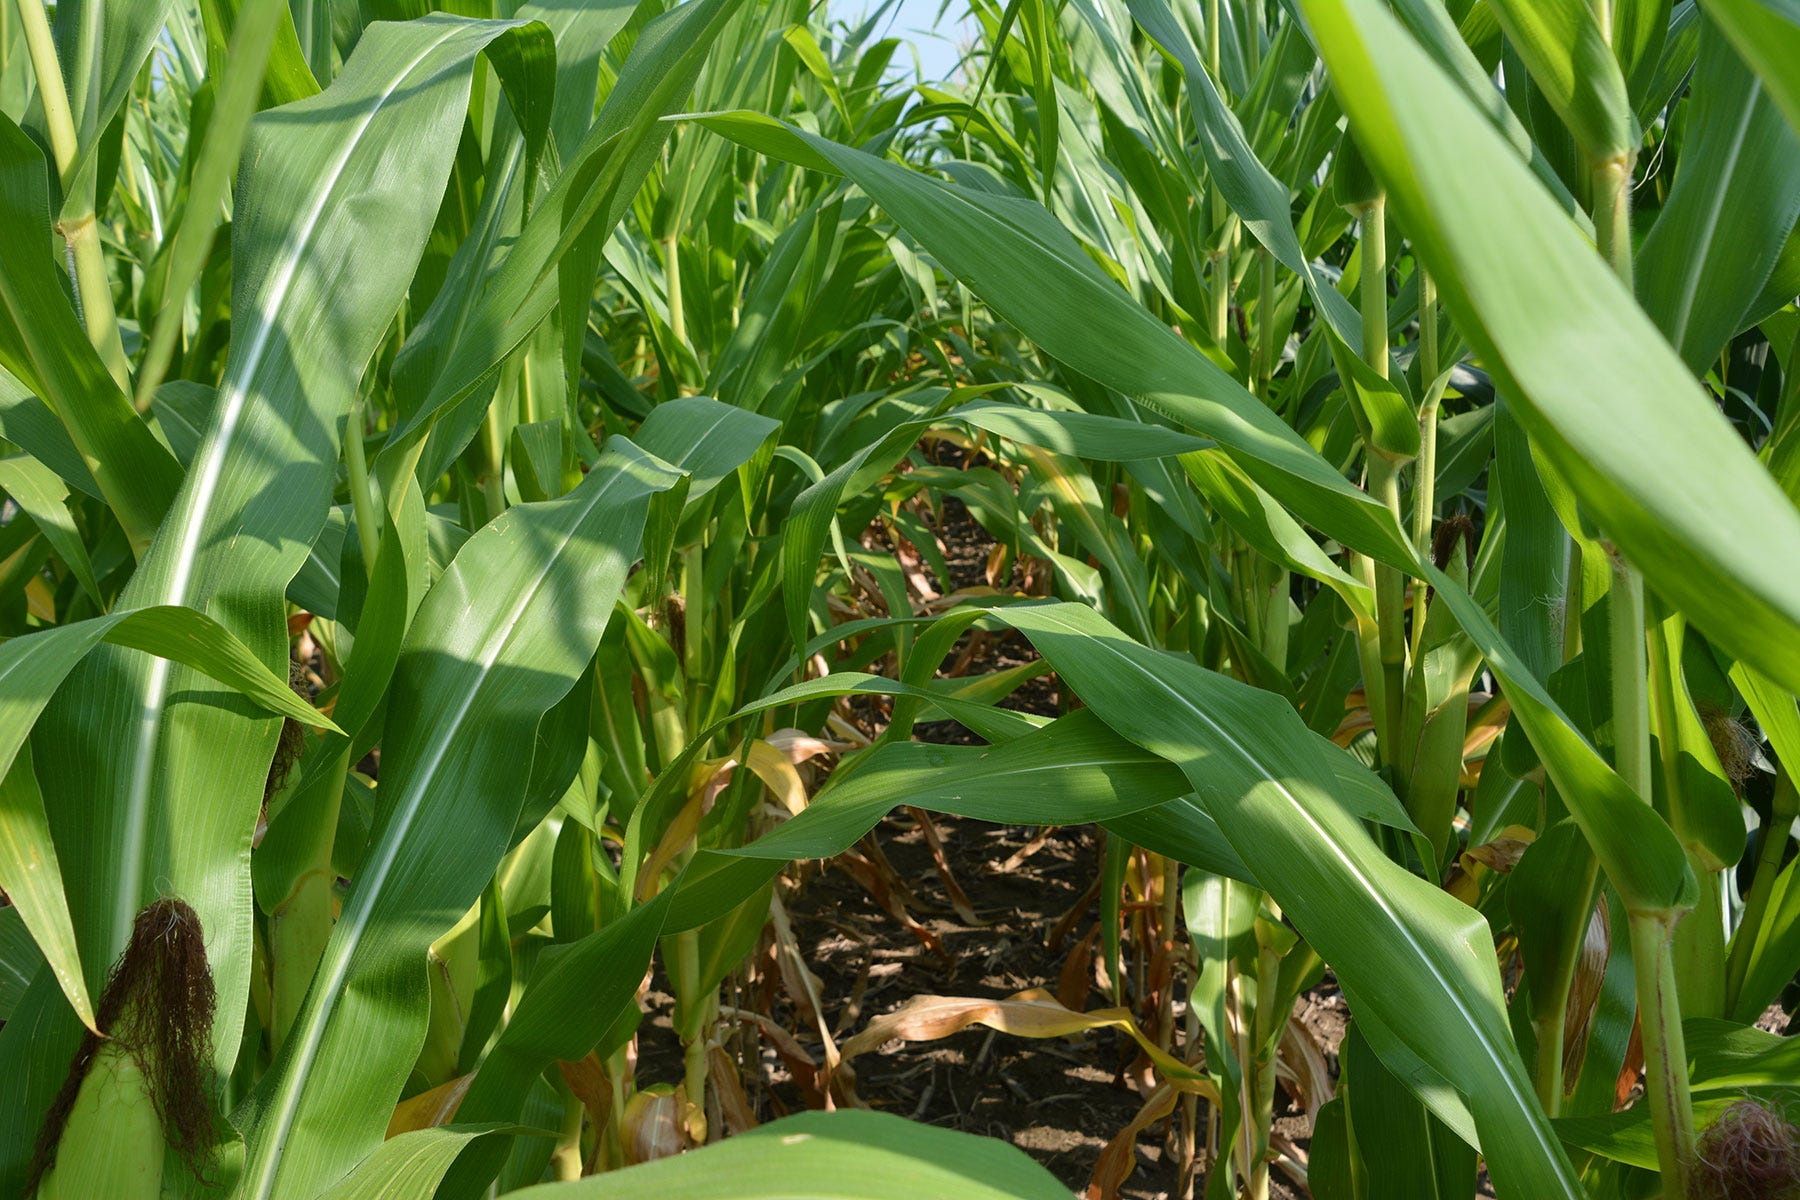 view between stalks in a green cornfield